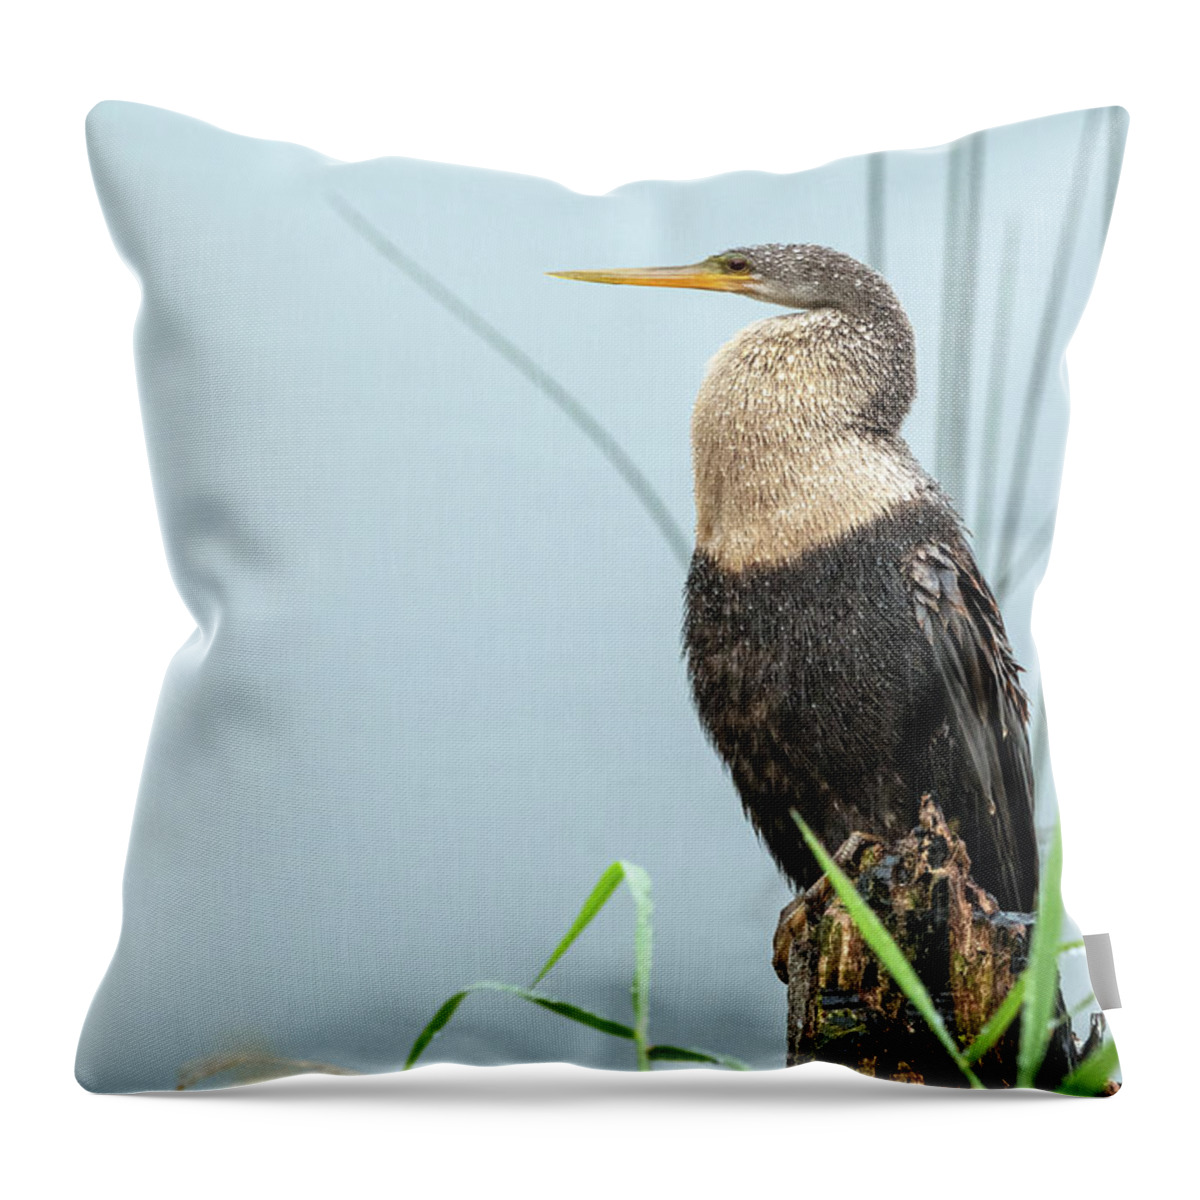 Bird Throw Pillow featuring the photograph Sittng in the Rain by Robert Carter